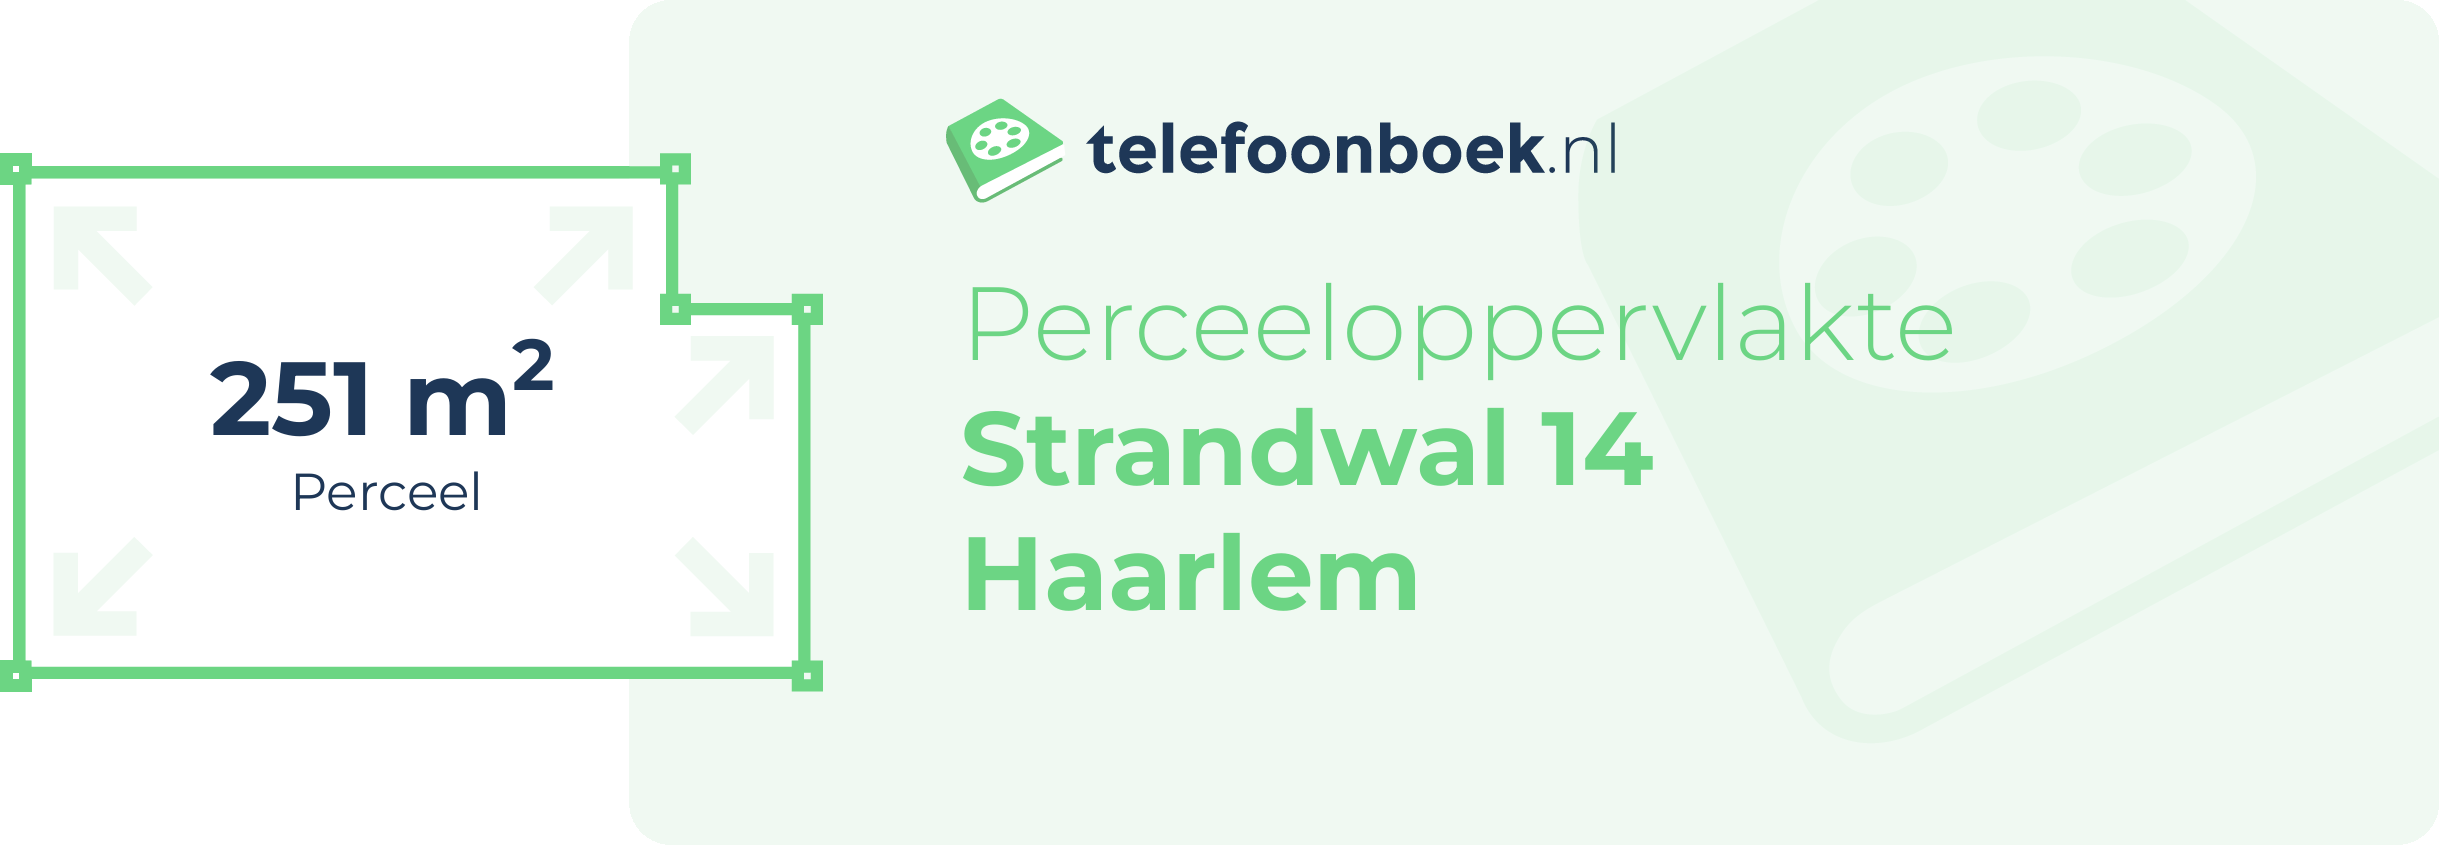 Perceeloppervlakte Strandwal 14 Haarlem